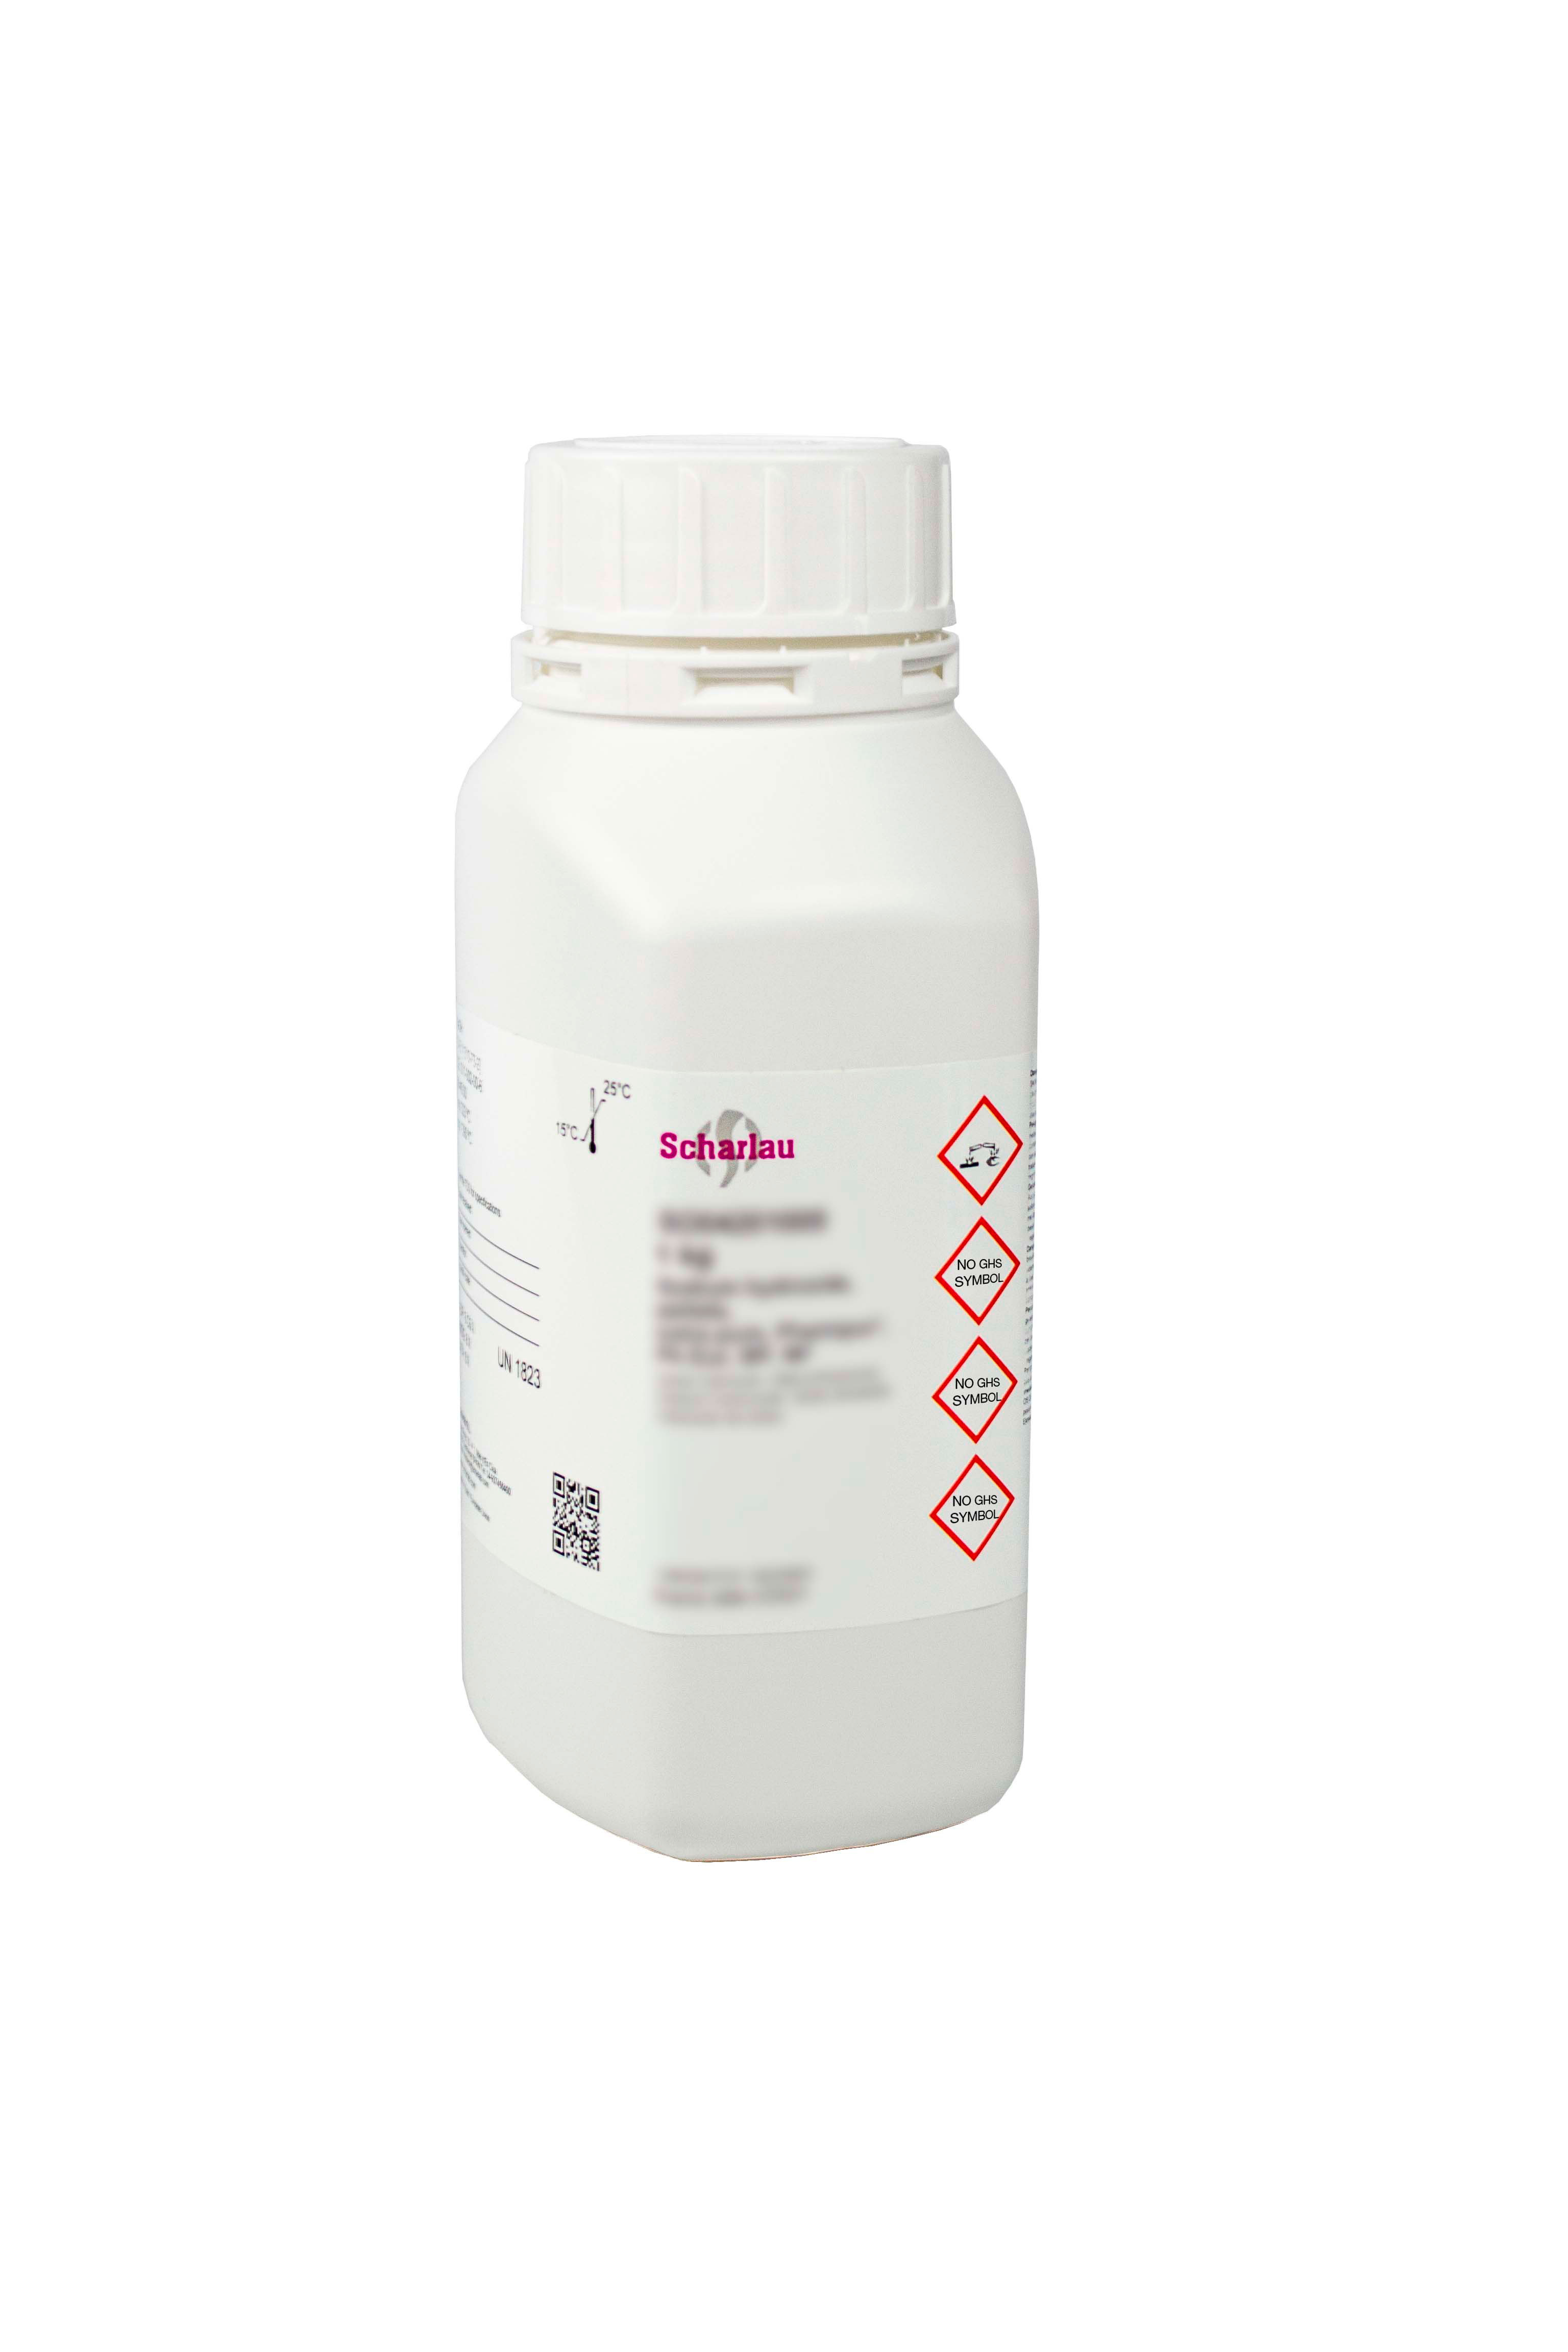 Magnesio sulfato heptahidrato, Pharmpur®, Ph Eur, BP, USP